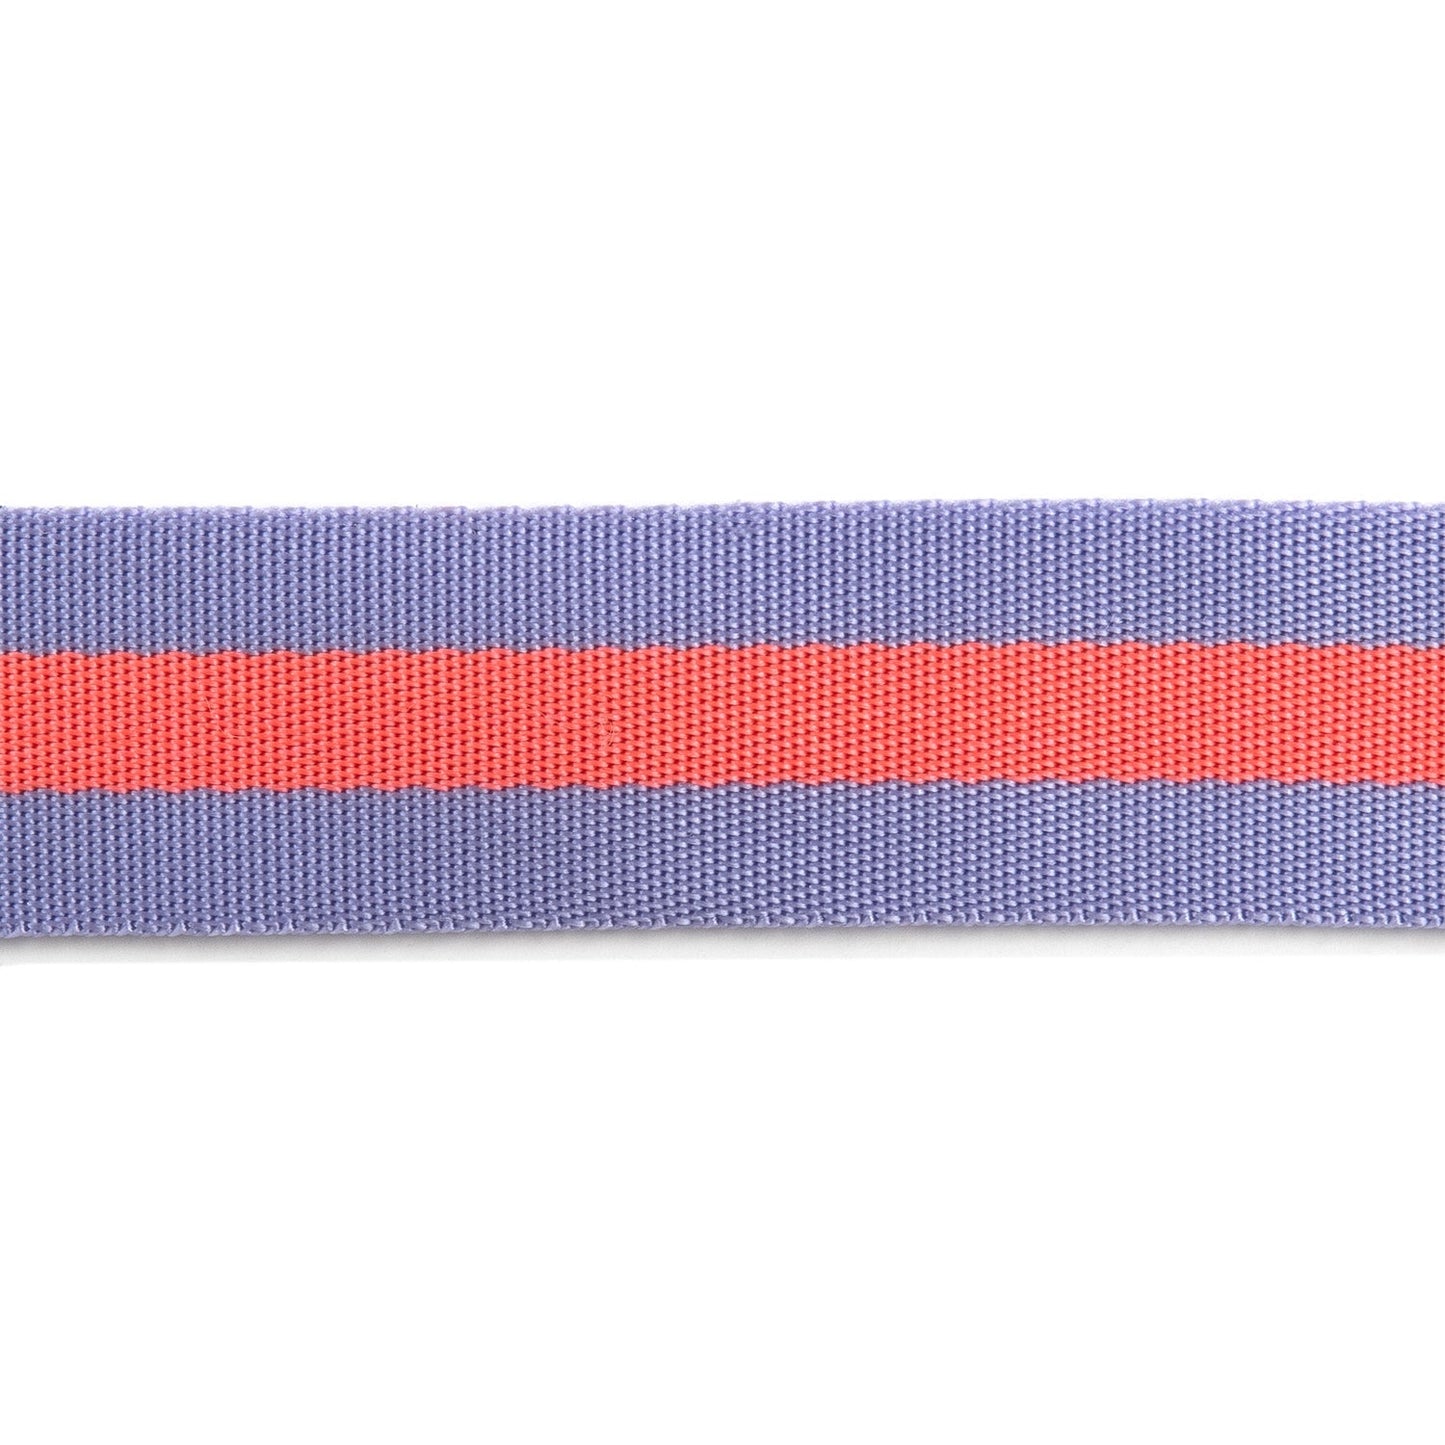 Tula Pink 1.5" x 2 Yards Nylon Webbing Lavender and Peach Stripes from Renaissance Ribbons for Sewing, Crafting, Bag Making